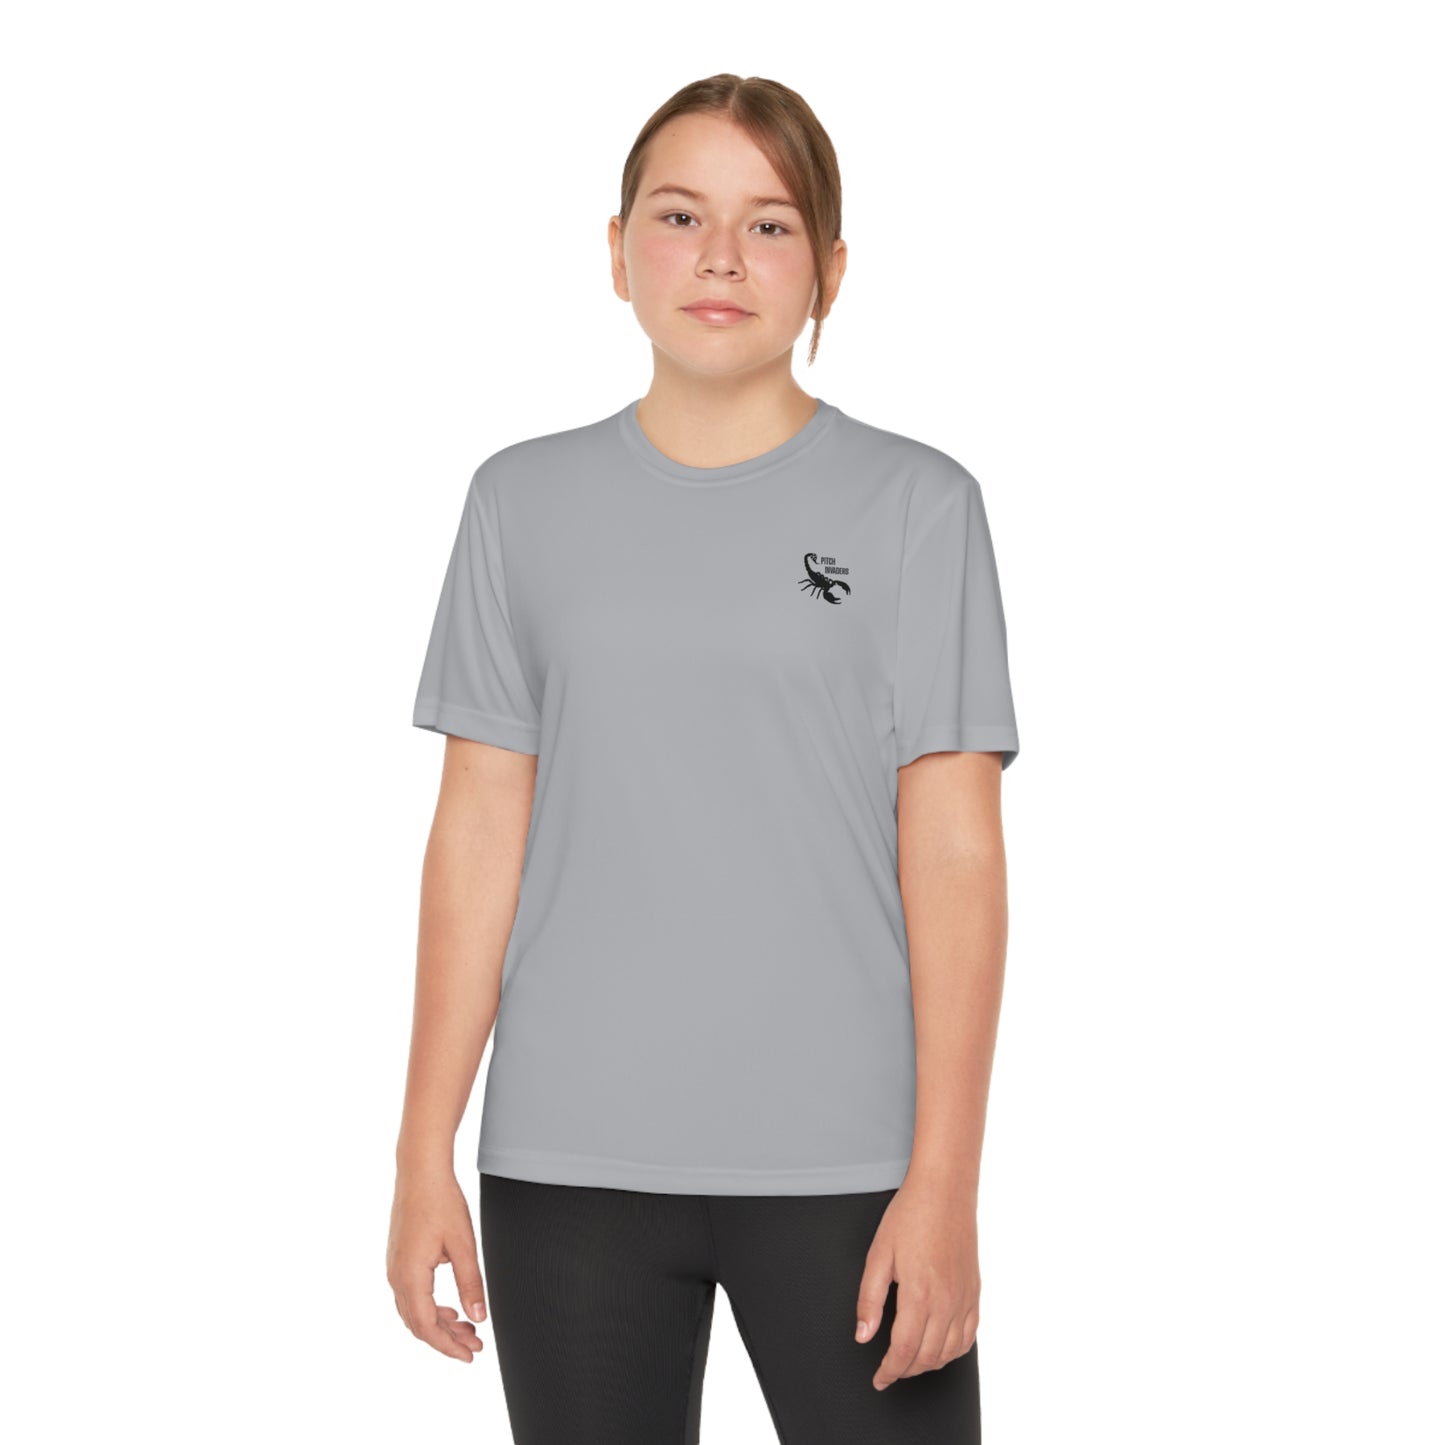 World Class Youth Athletic T-Shirt (Unisex)